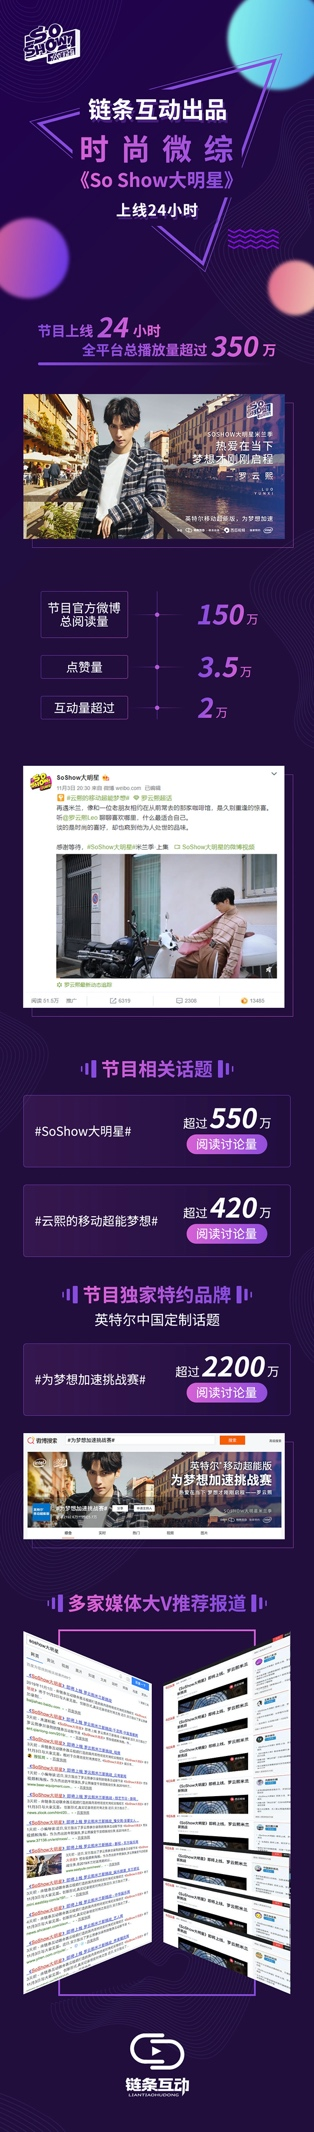 《SoShow大明星》聚焦罗云熙的时尚挑战首期上线播放量破500万_圈层